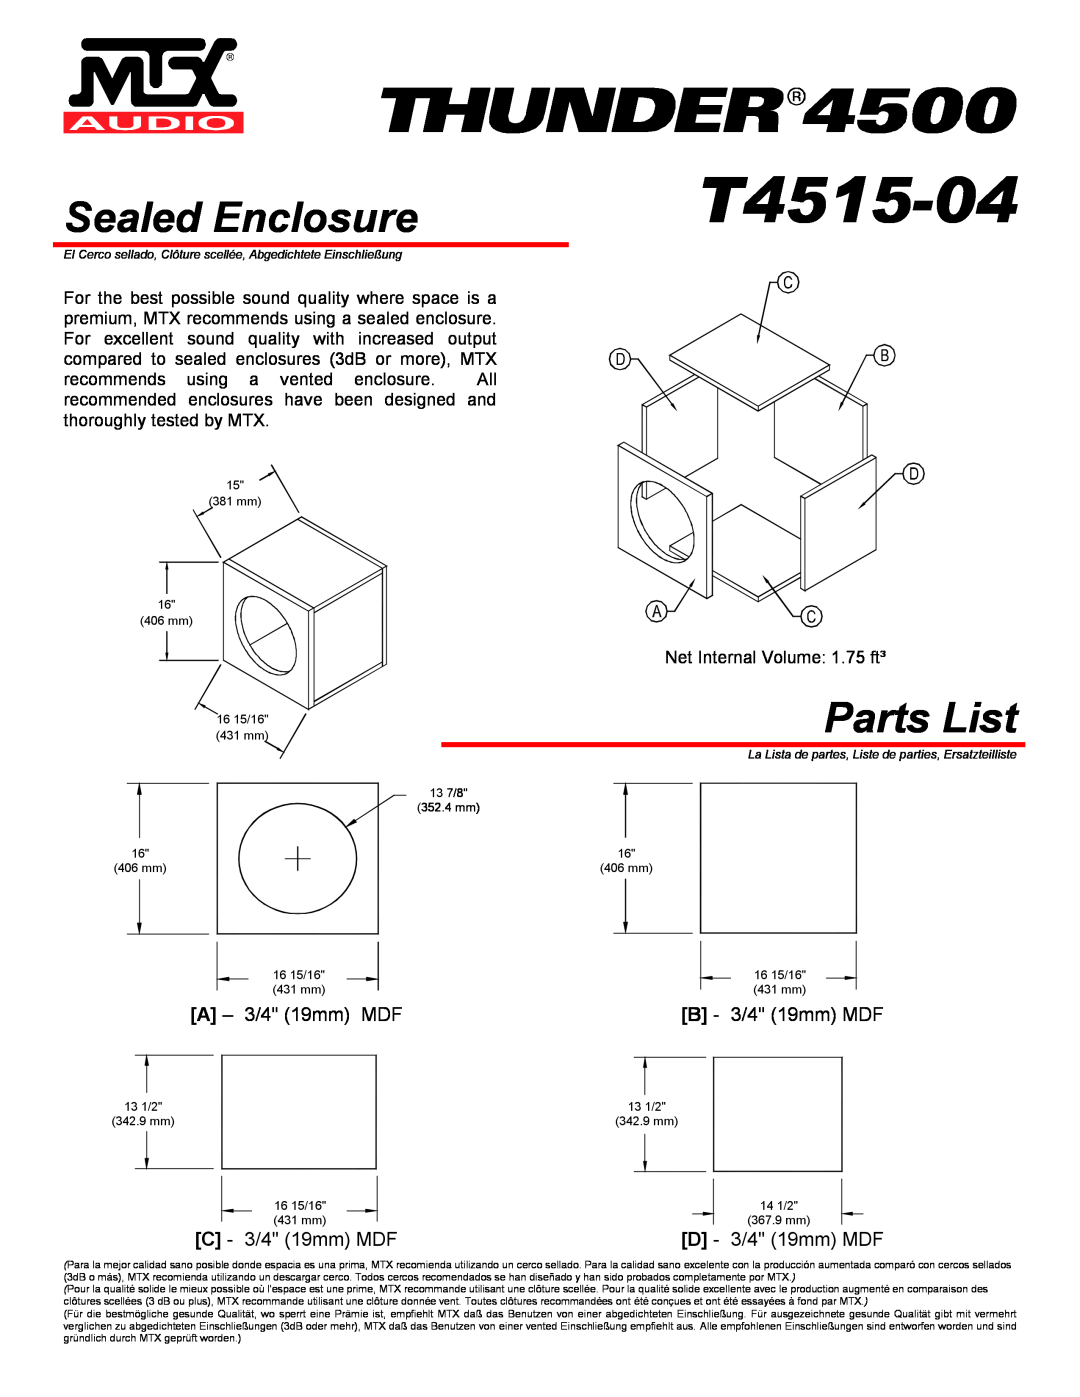 MTX Audio T4515-04 Sealed Enclosure, Parts List, A - 3/4 19mm MDF, B - 3/4 19mm MDF, C - 3/4 19mm MDF, D - 3/4 19mm MDF 